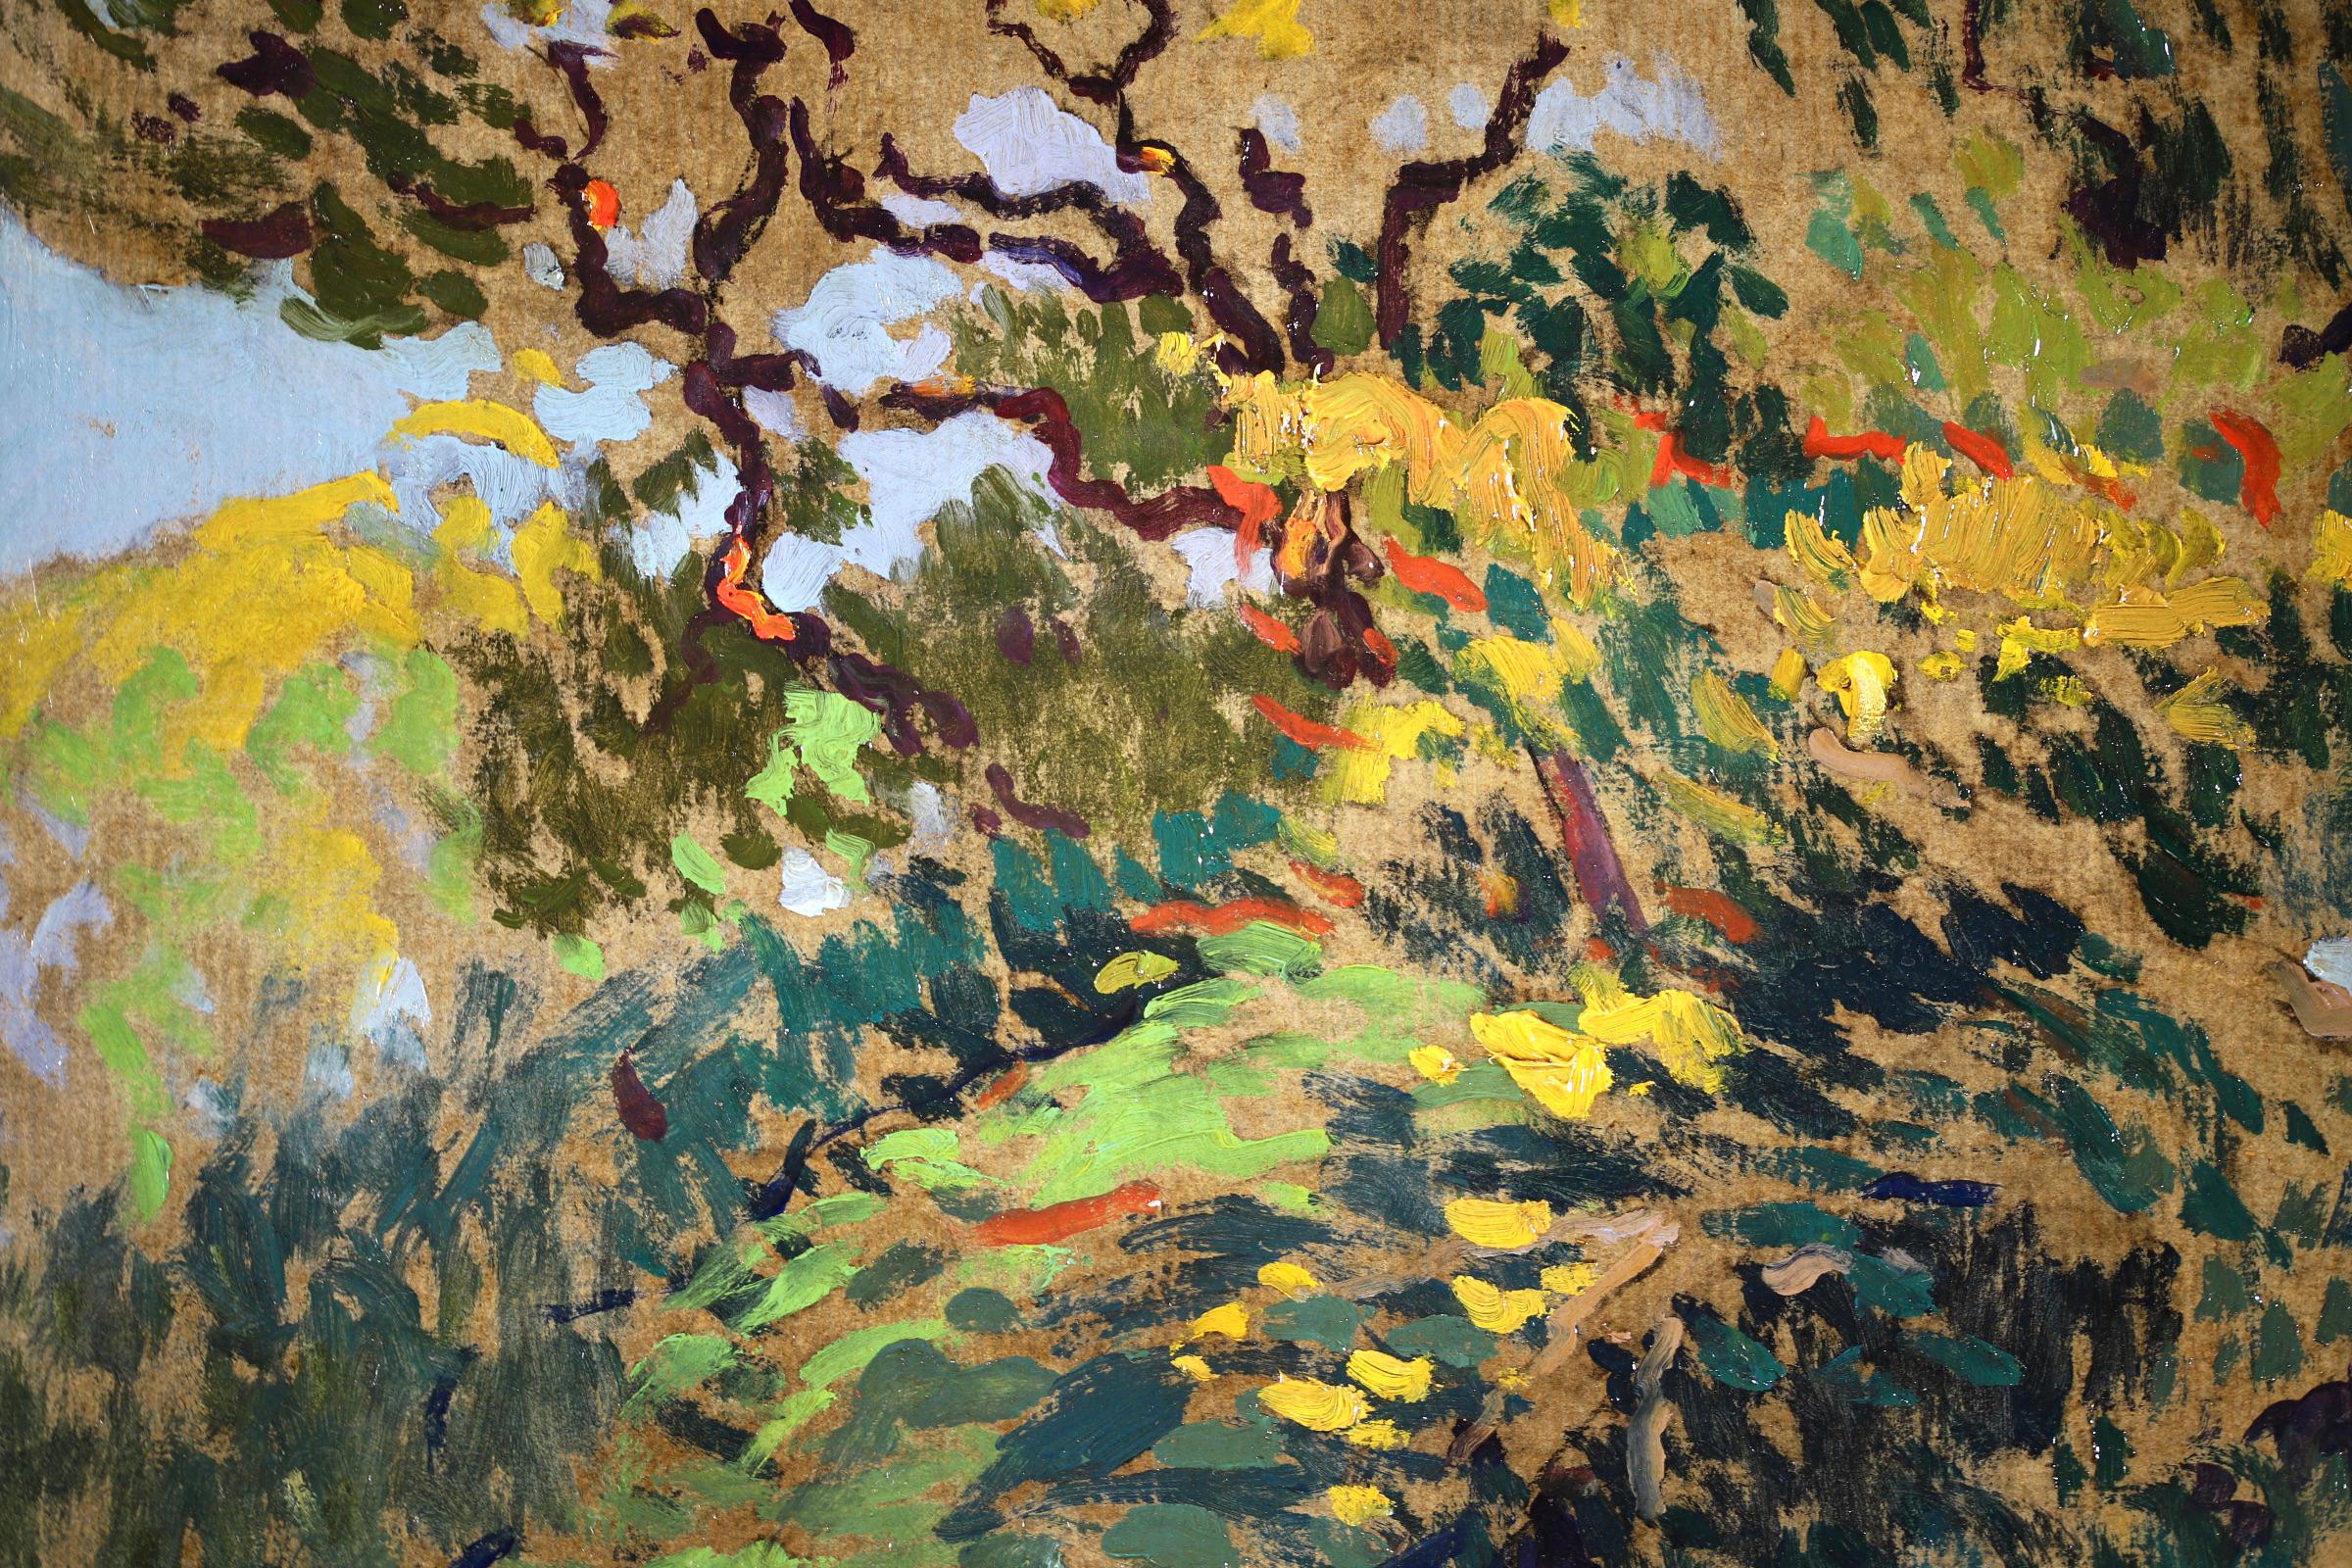 Figures in the Forest - Post Impressionist Landscape Oil by Paul Gernez - Post-Impressionist Painting by Paul-Élie Gernez